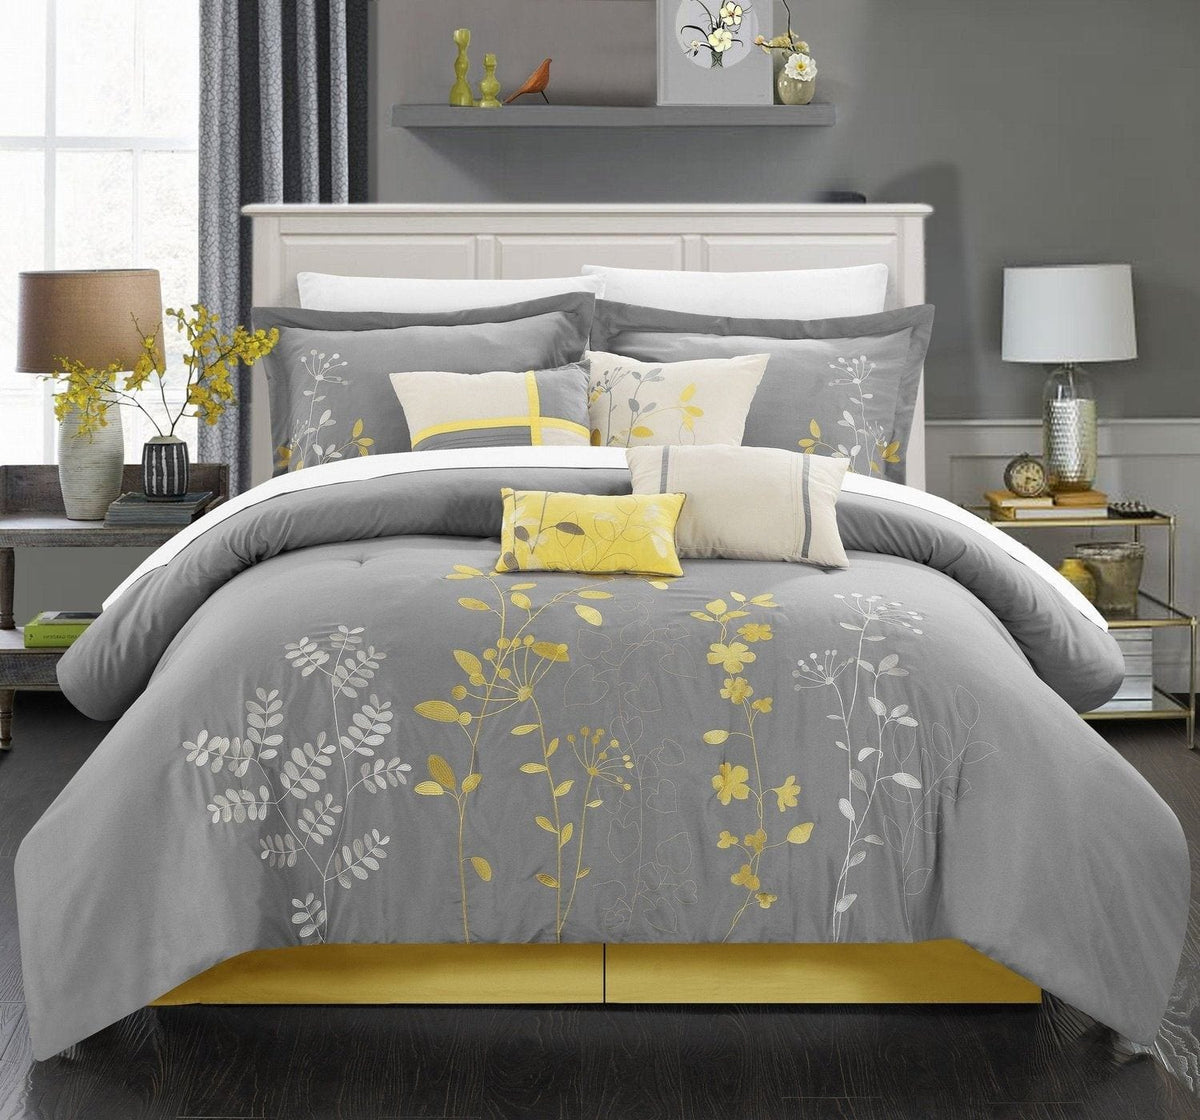 Spirit Linen Home 5-Pc. Metallic Comforter Set King Geo Floral